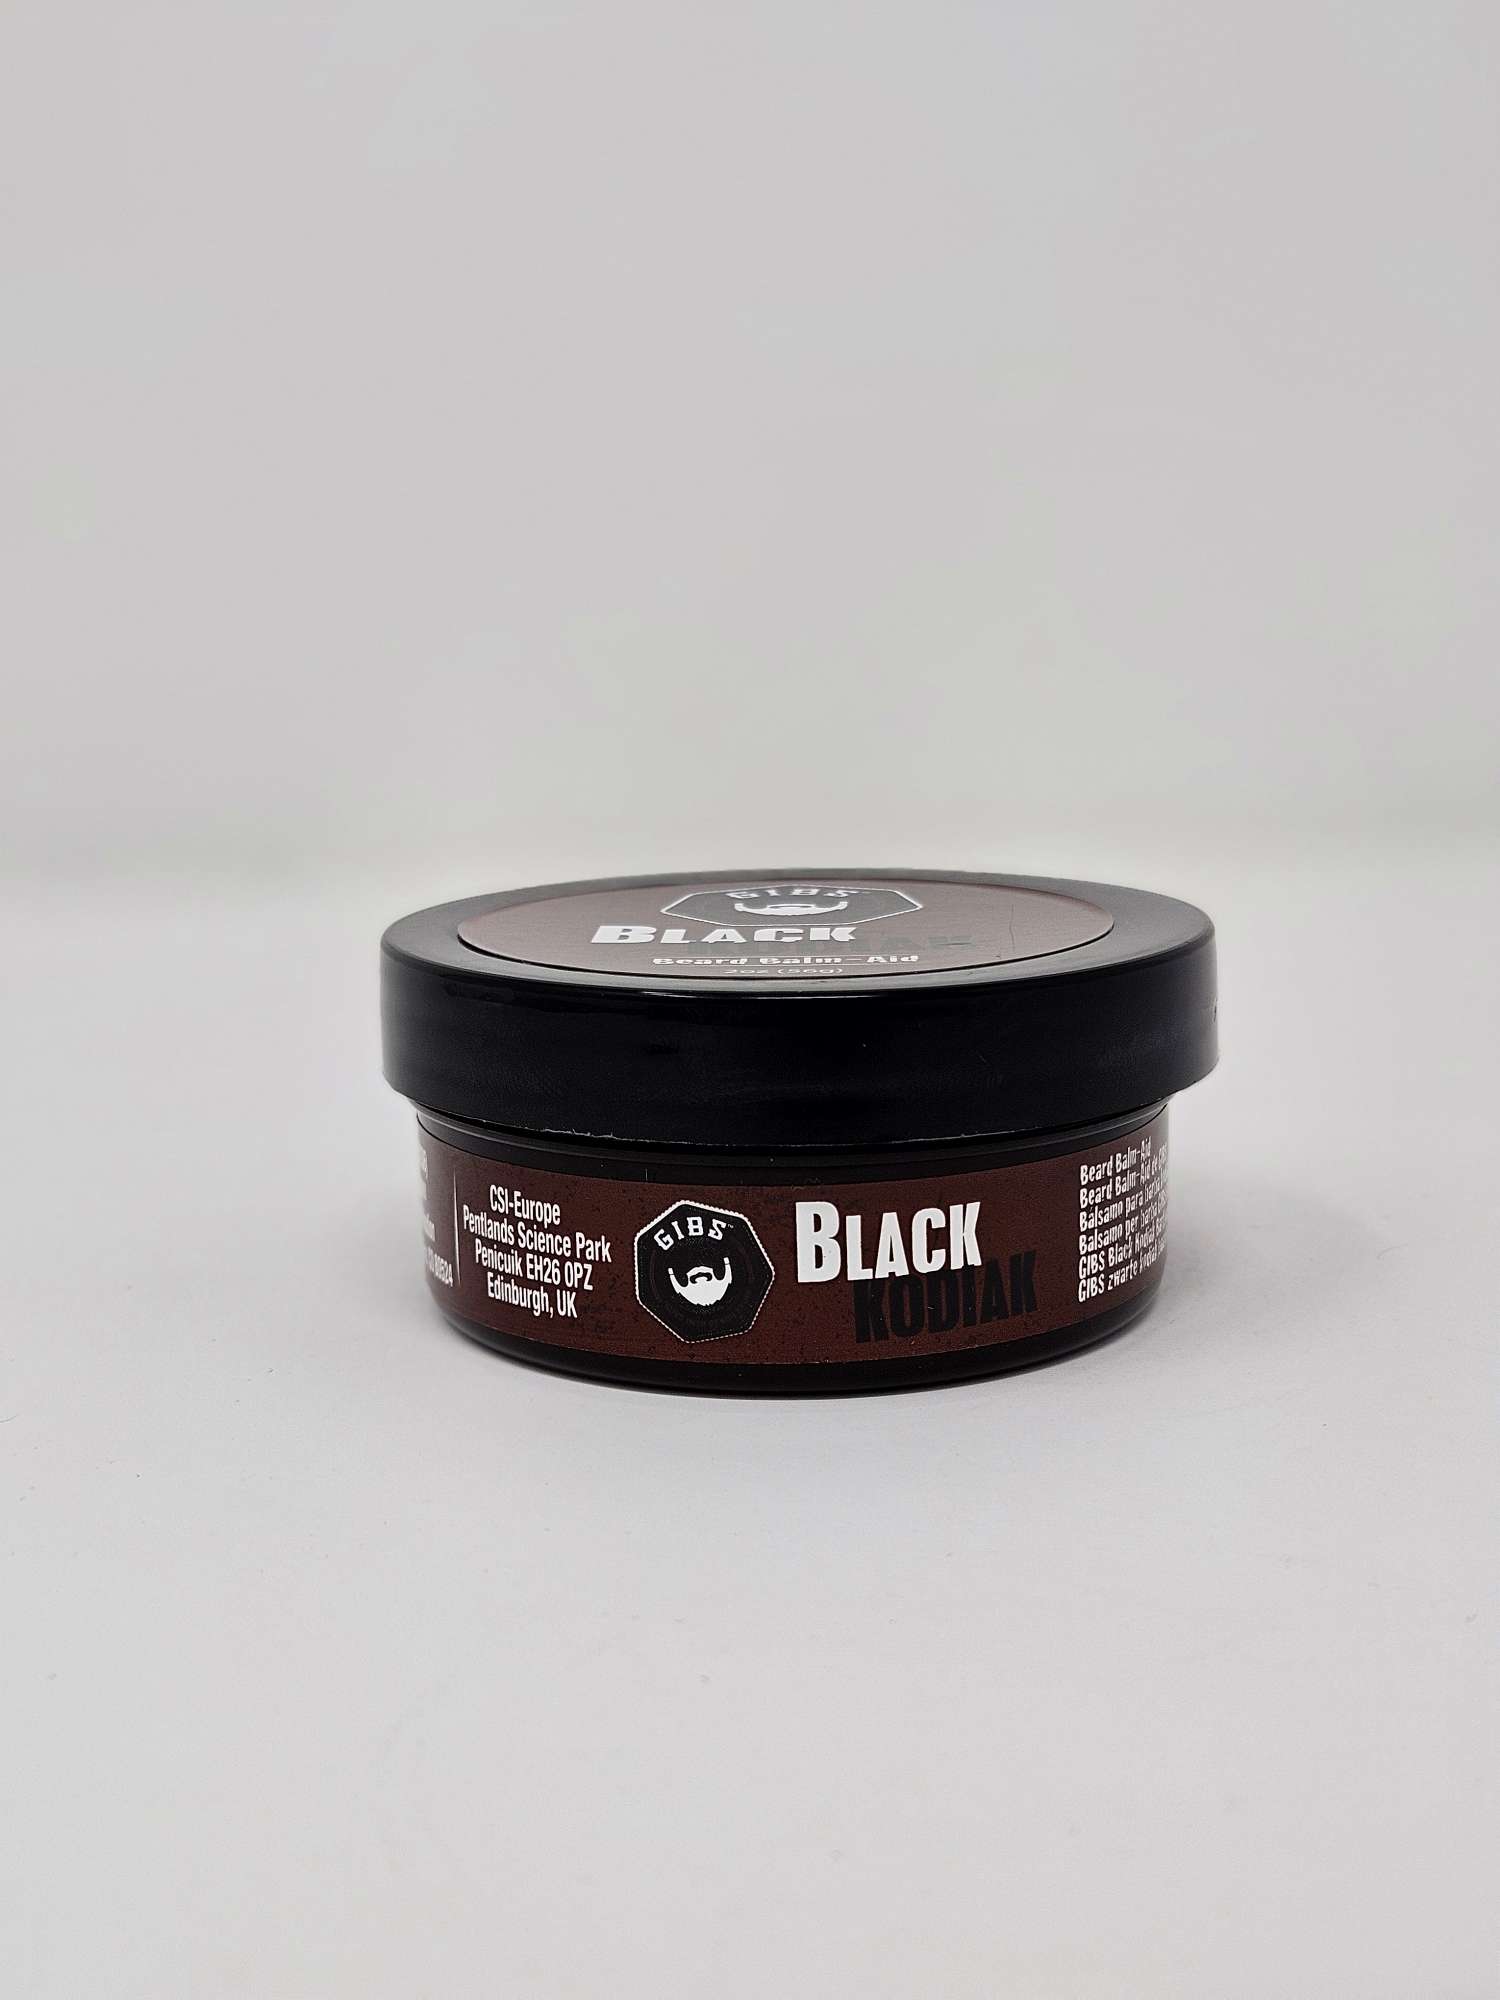 GIBS Black Kodiak Beard Balm-Aid - 2oz